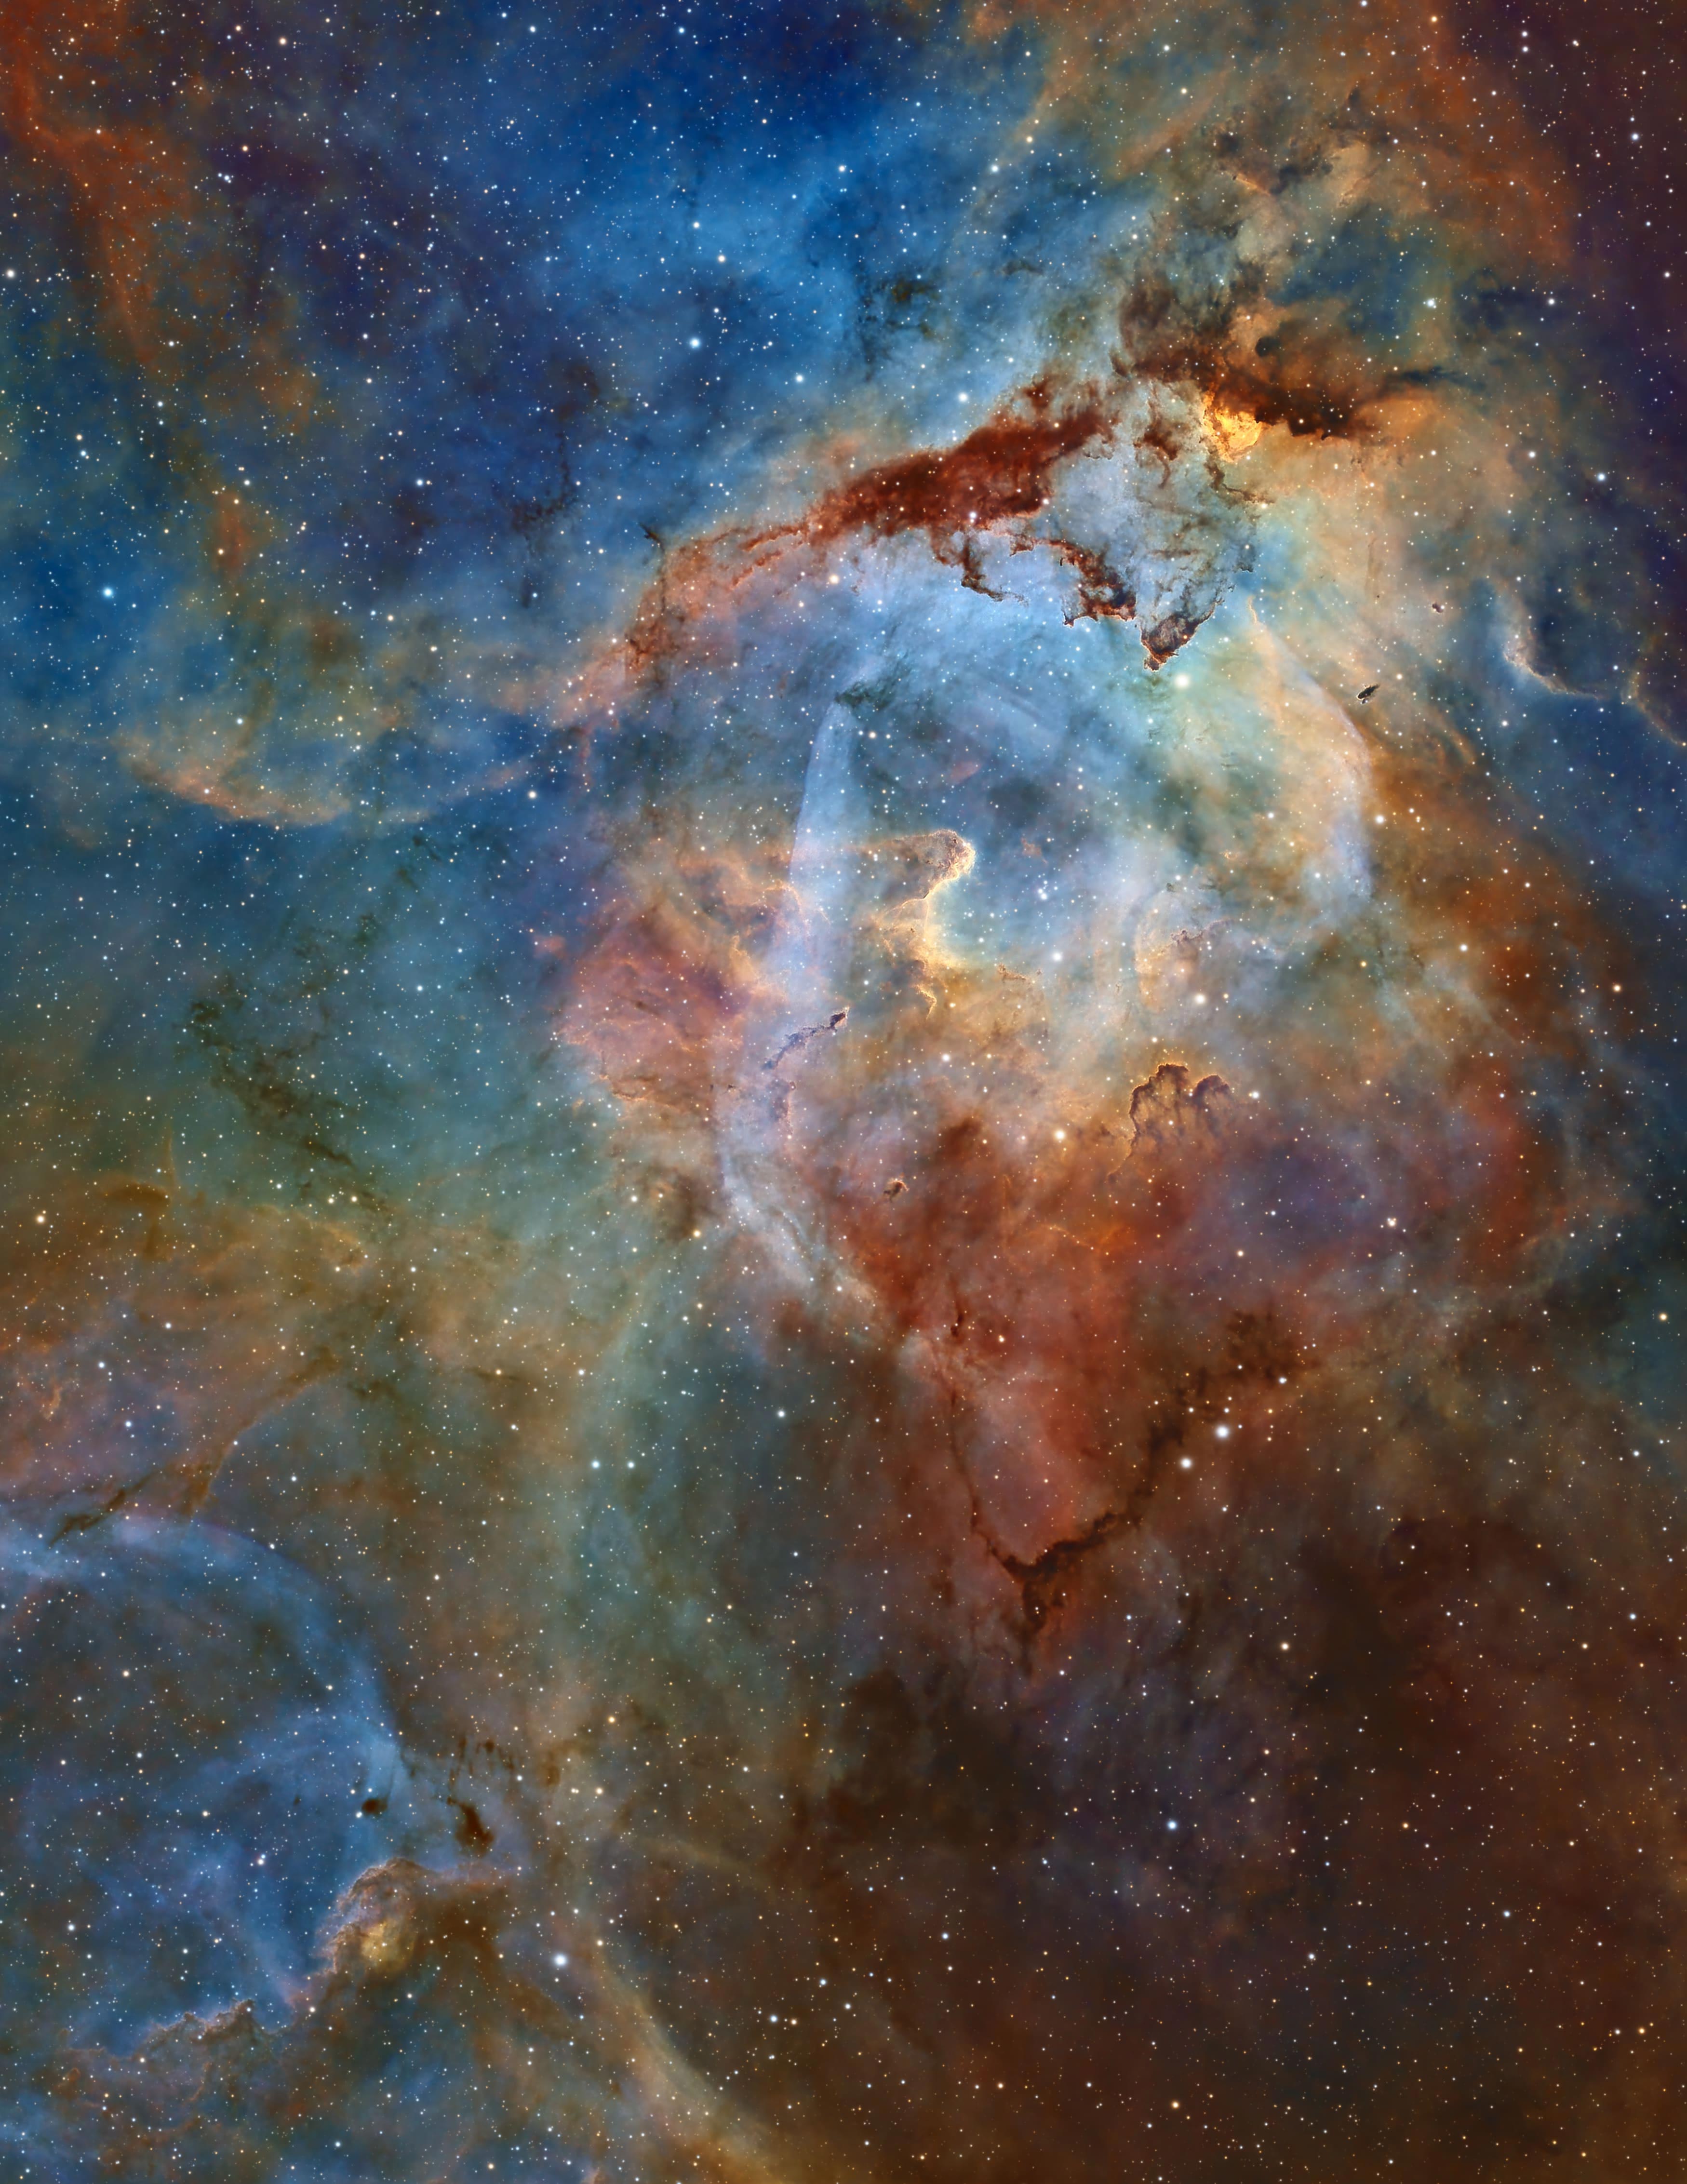 Nebula kompleks berwarna-warni